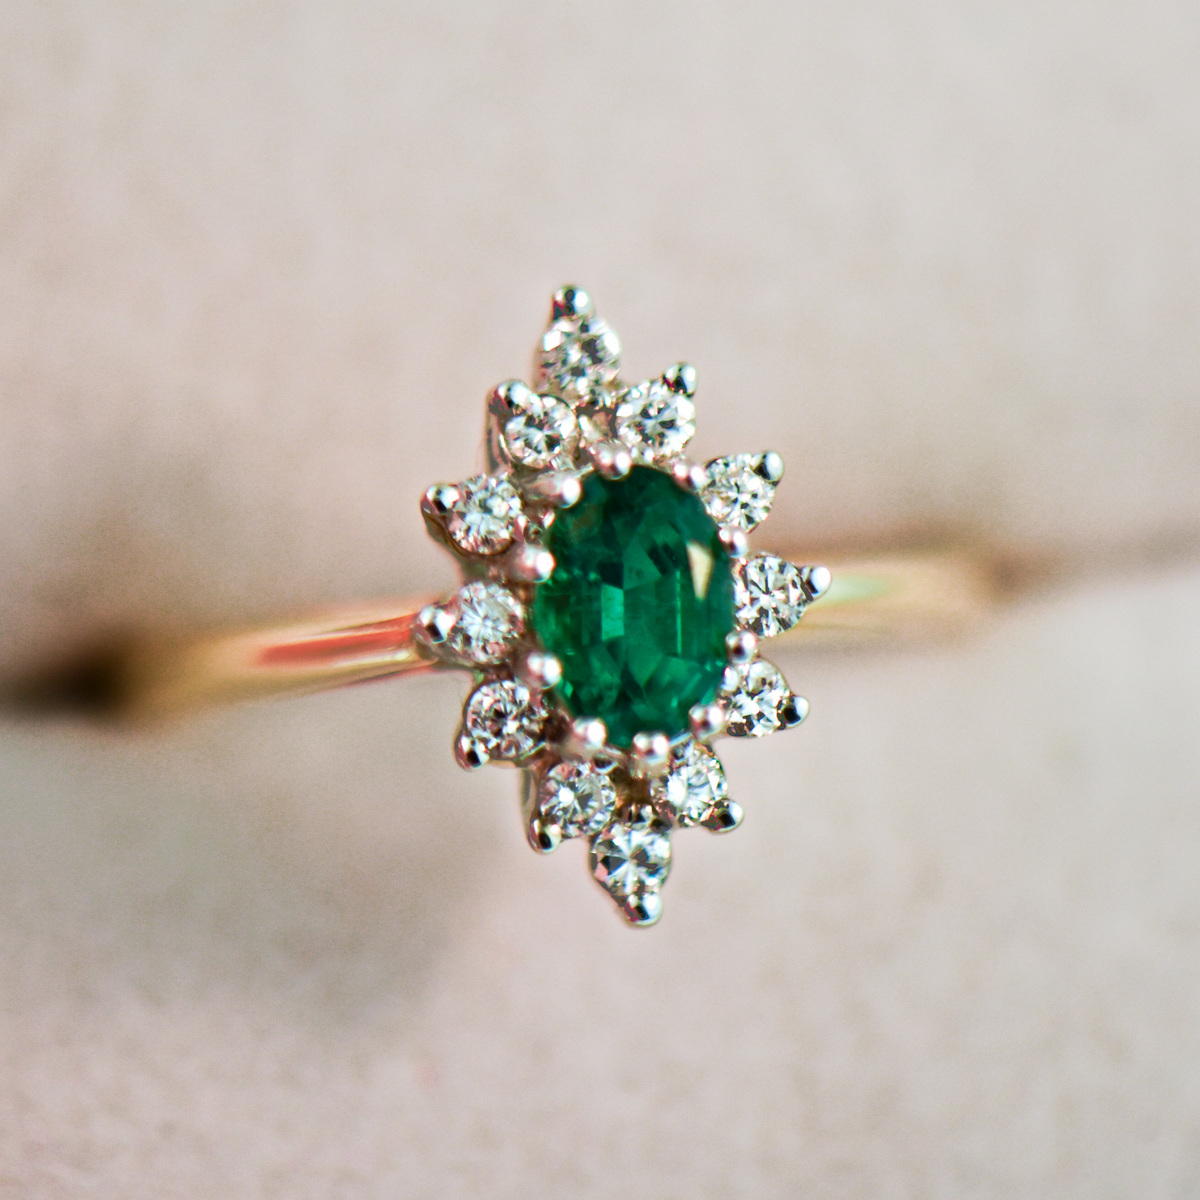 Thalia | Round Emerald and Diamond Ring | King + Curated | Beacon, NY